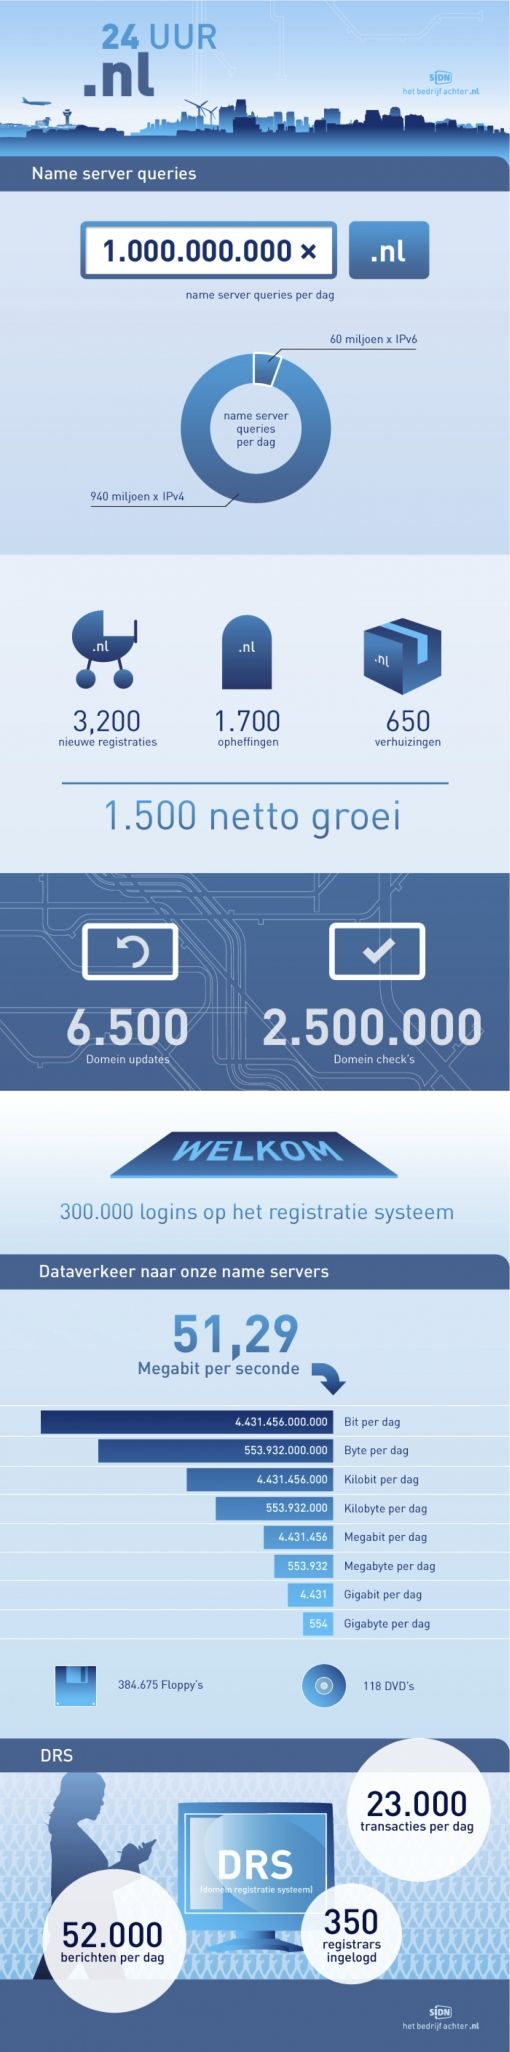 infographic-24-uur-nl.jpg